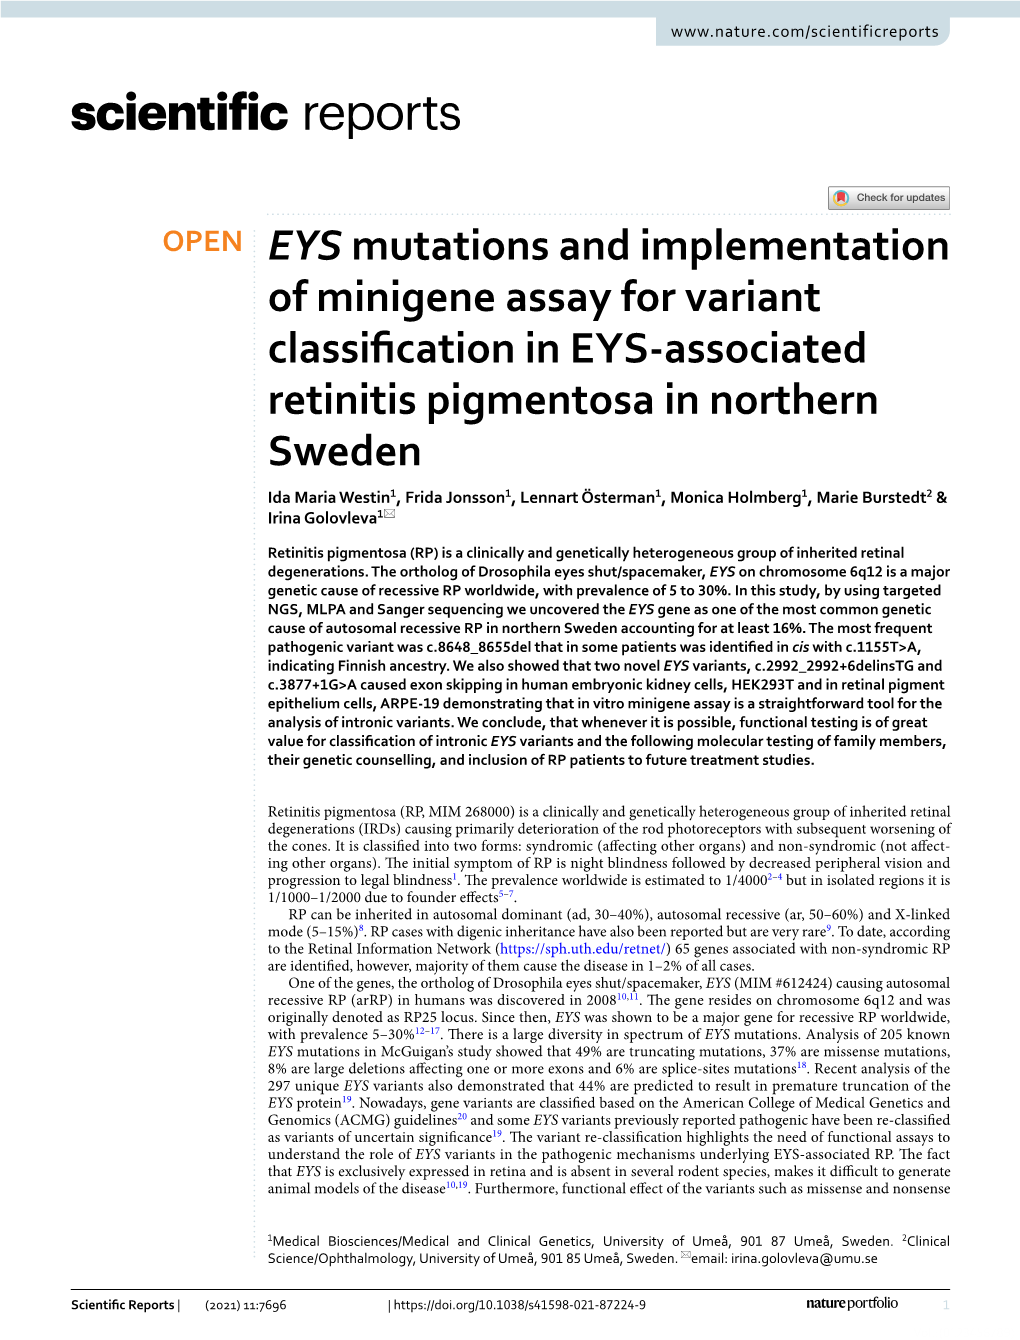 EYS Mutations and Implementation of Minigene Assay for Variant